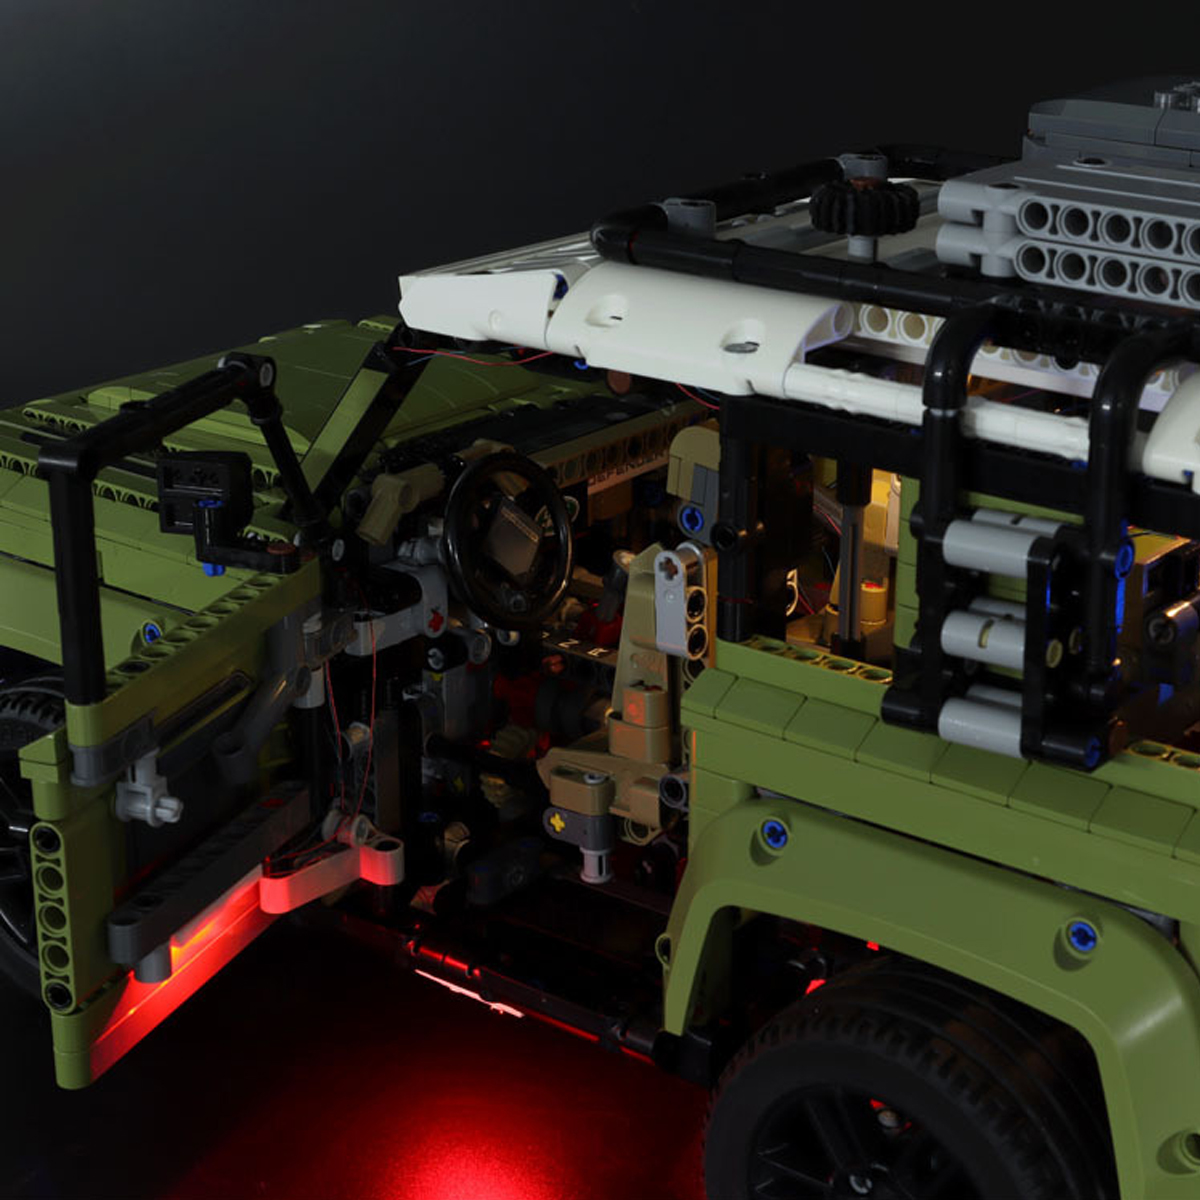 DIY-USB-LED-Strip-Light-Kit-ONLY-For-LEGO-42110-For-Land-Rover-Defender-Car-Bricks-Toy-With-Remote-C-1658165-4